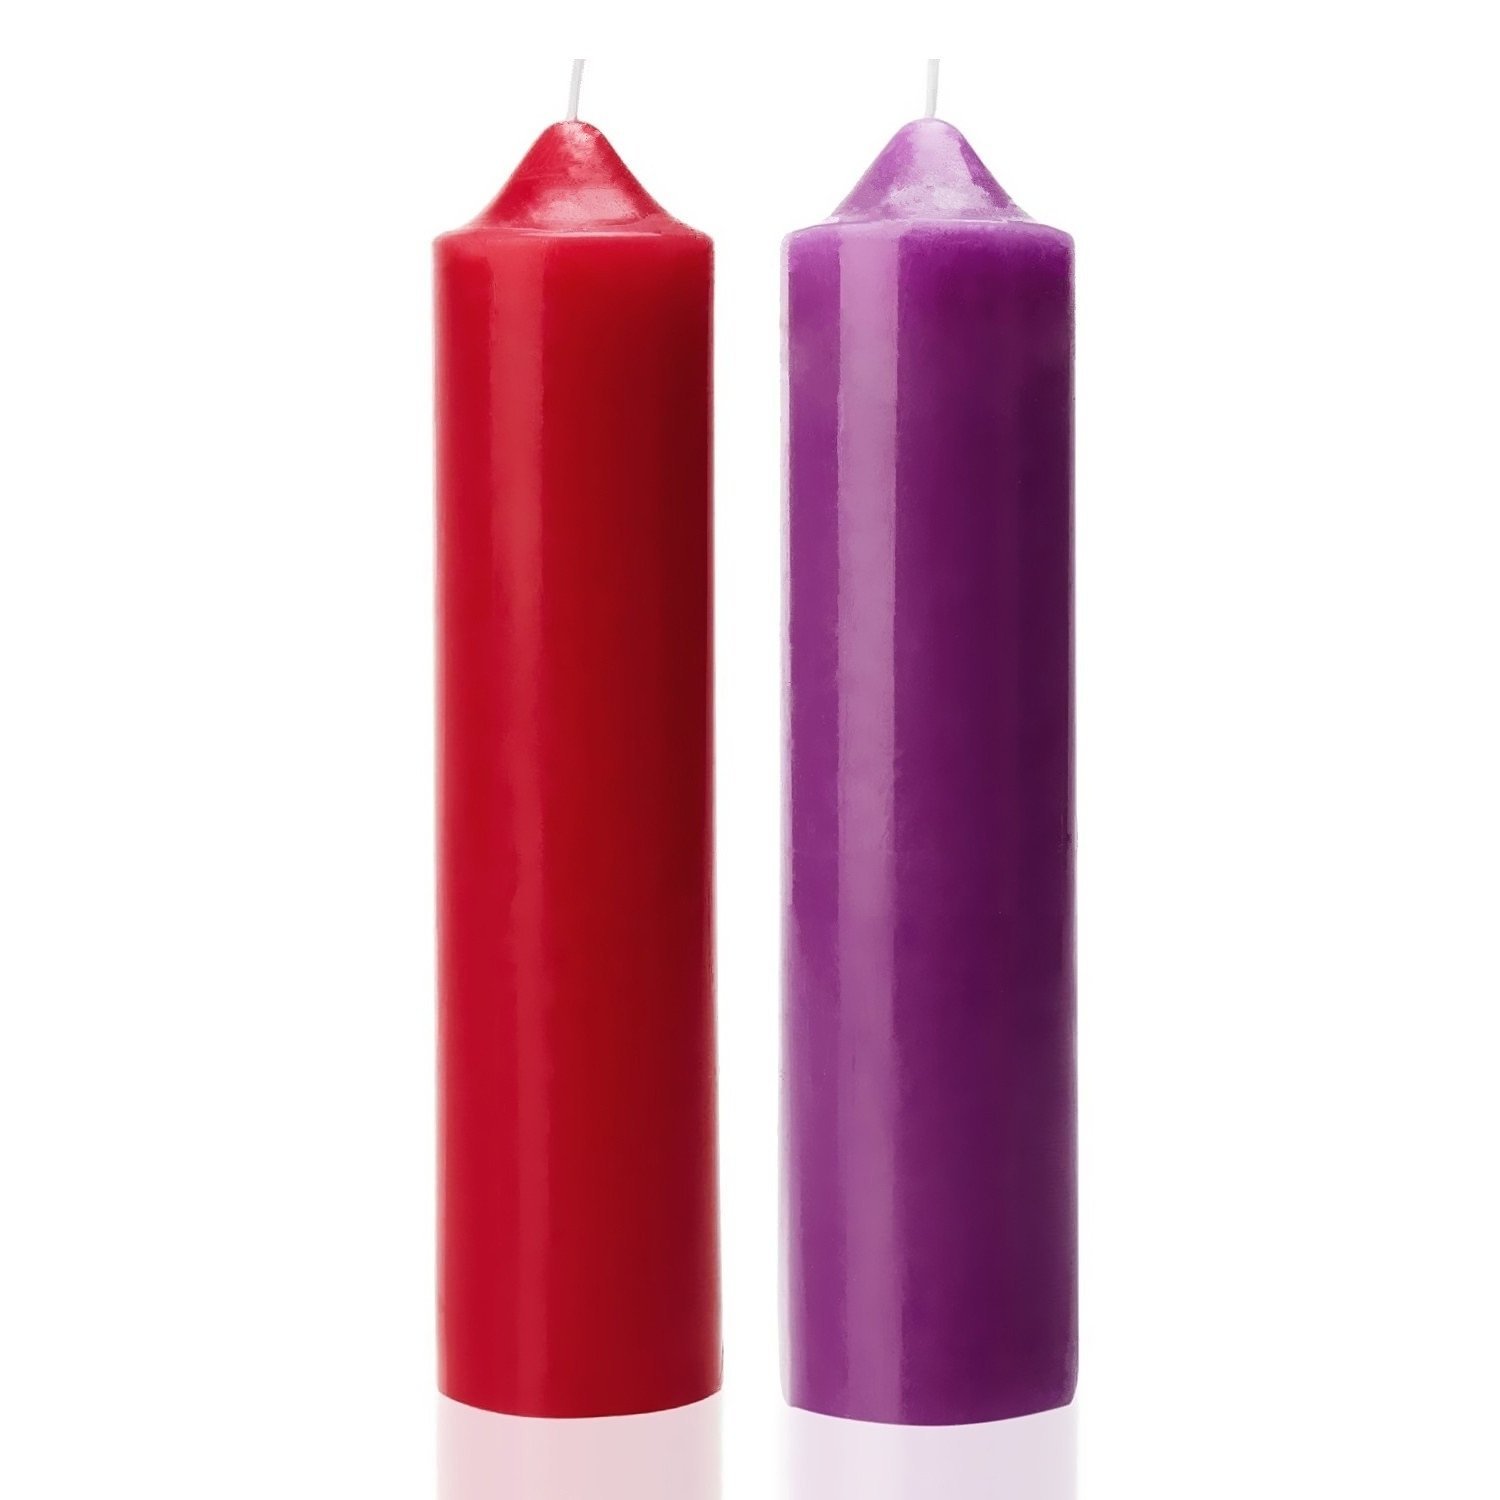 Amazon.com: Low Heat Bondage Candles for Sensation, EROKAY Romantic ...